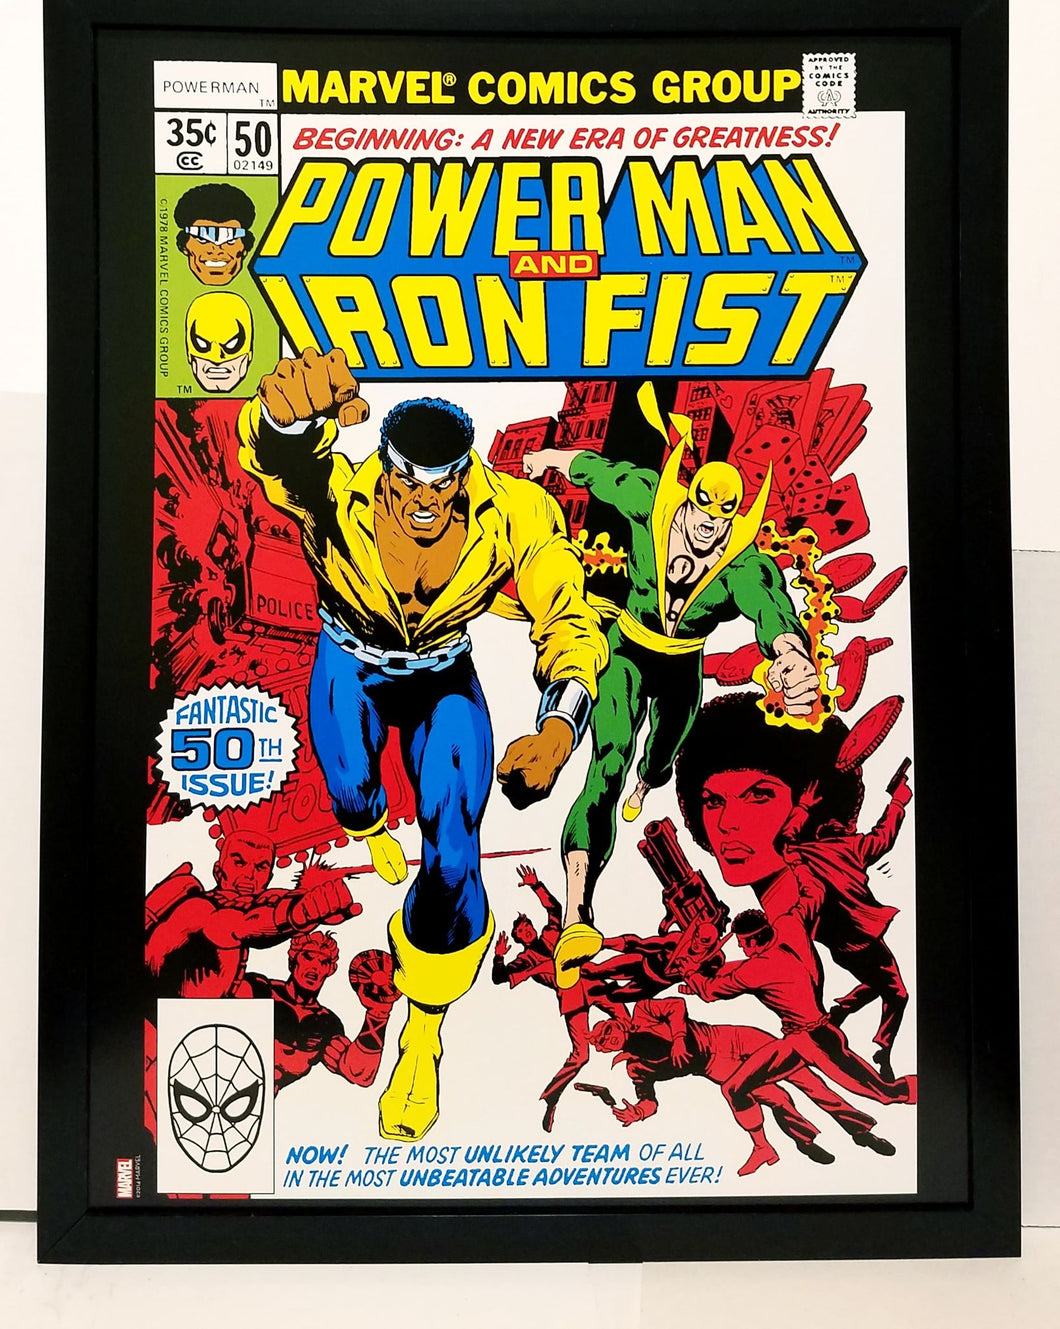 Power Man & Iron Fist #50 by John Byrne 12x16 FRAMED Art Print Marvel Comics Poster